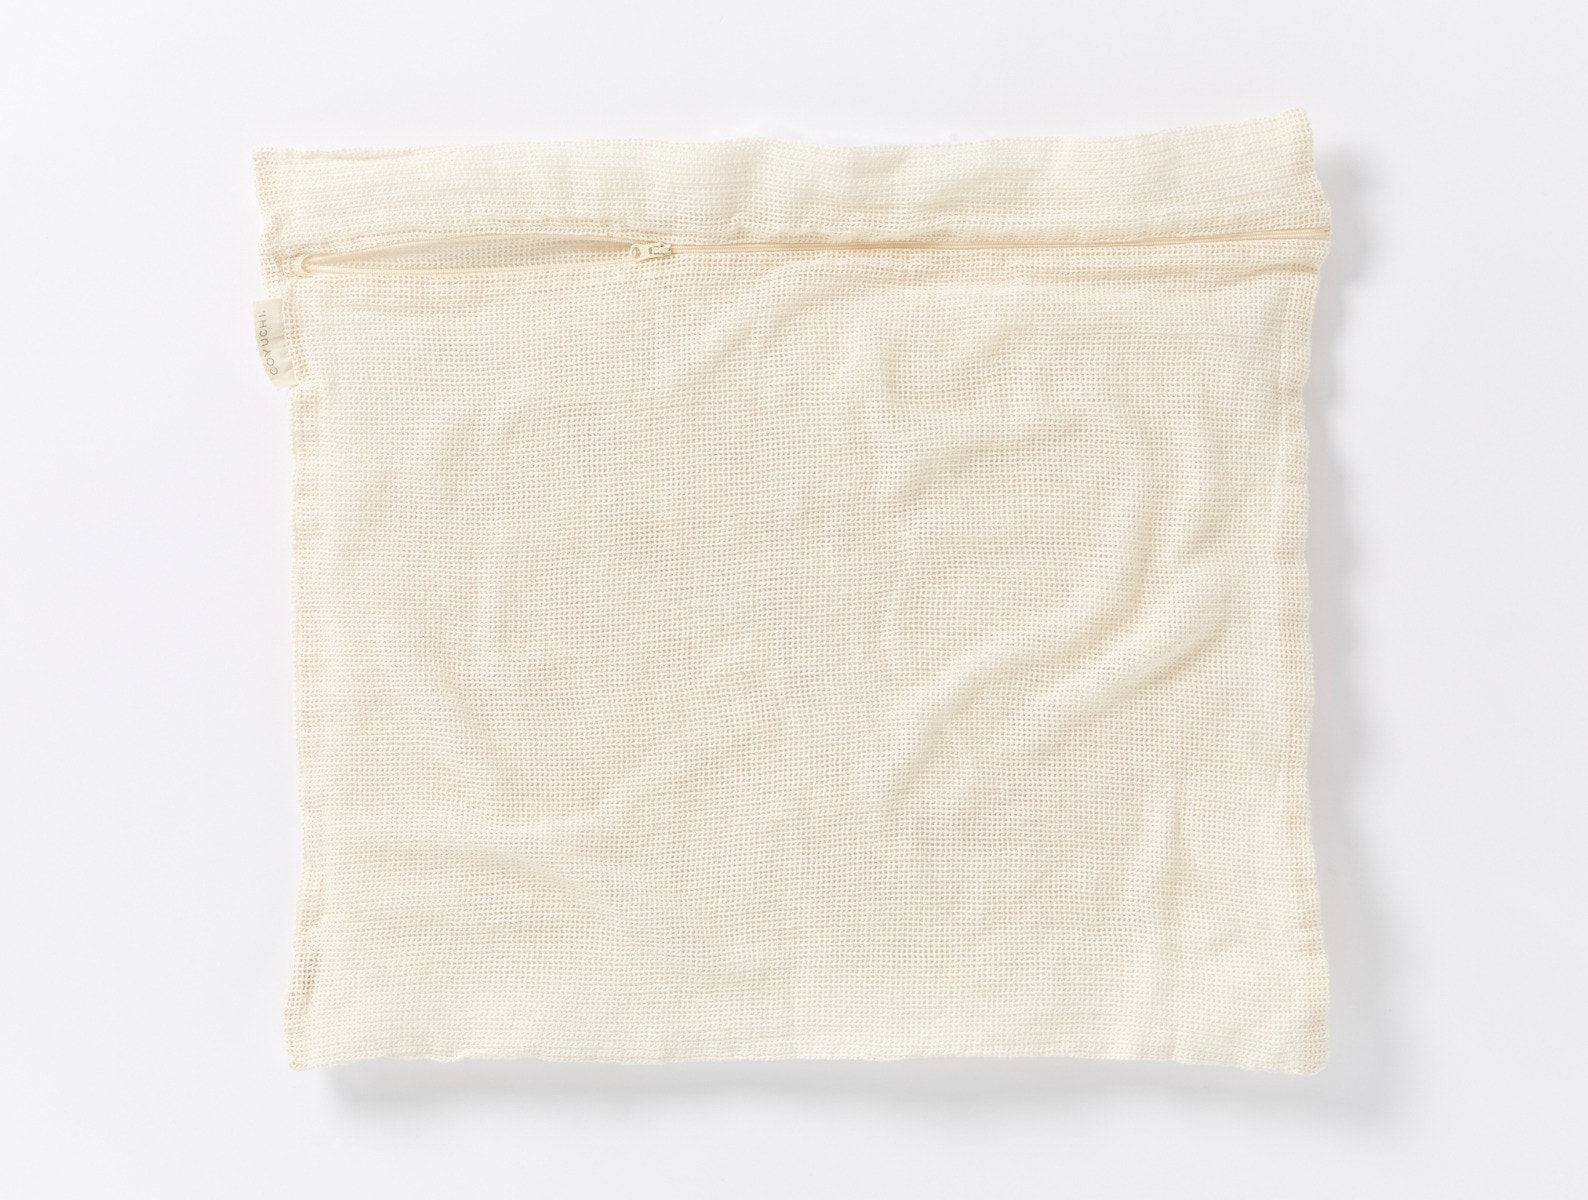 Mesh fabric from 100% organic cotton, Netting Fabric